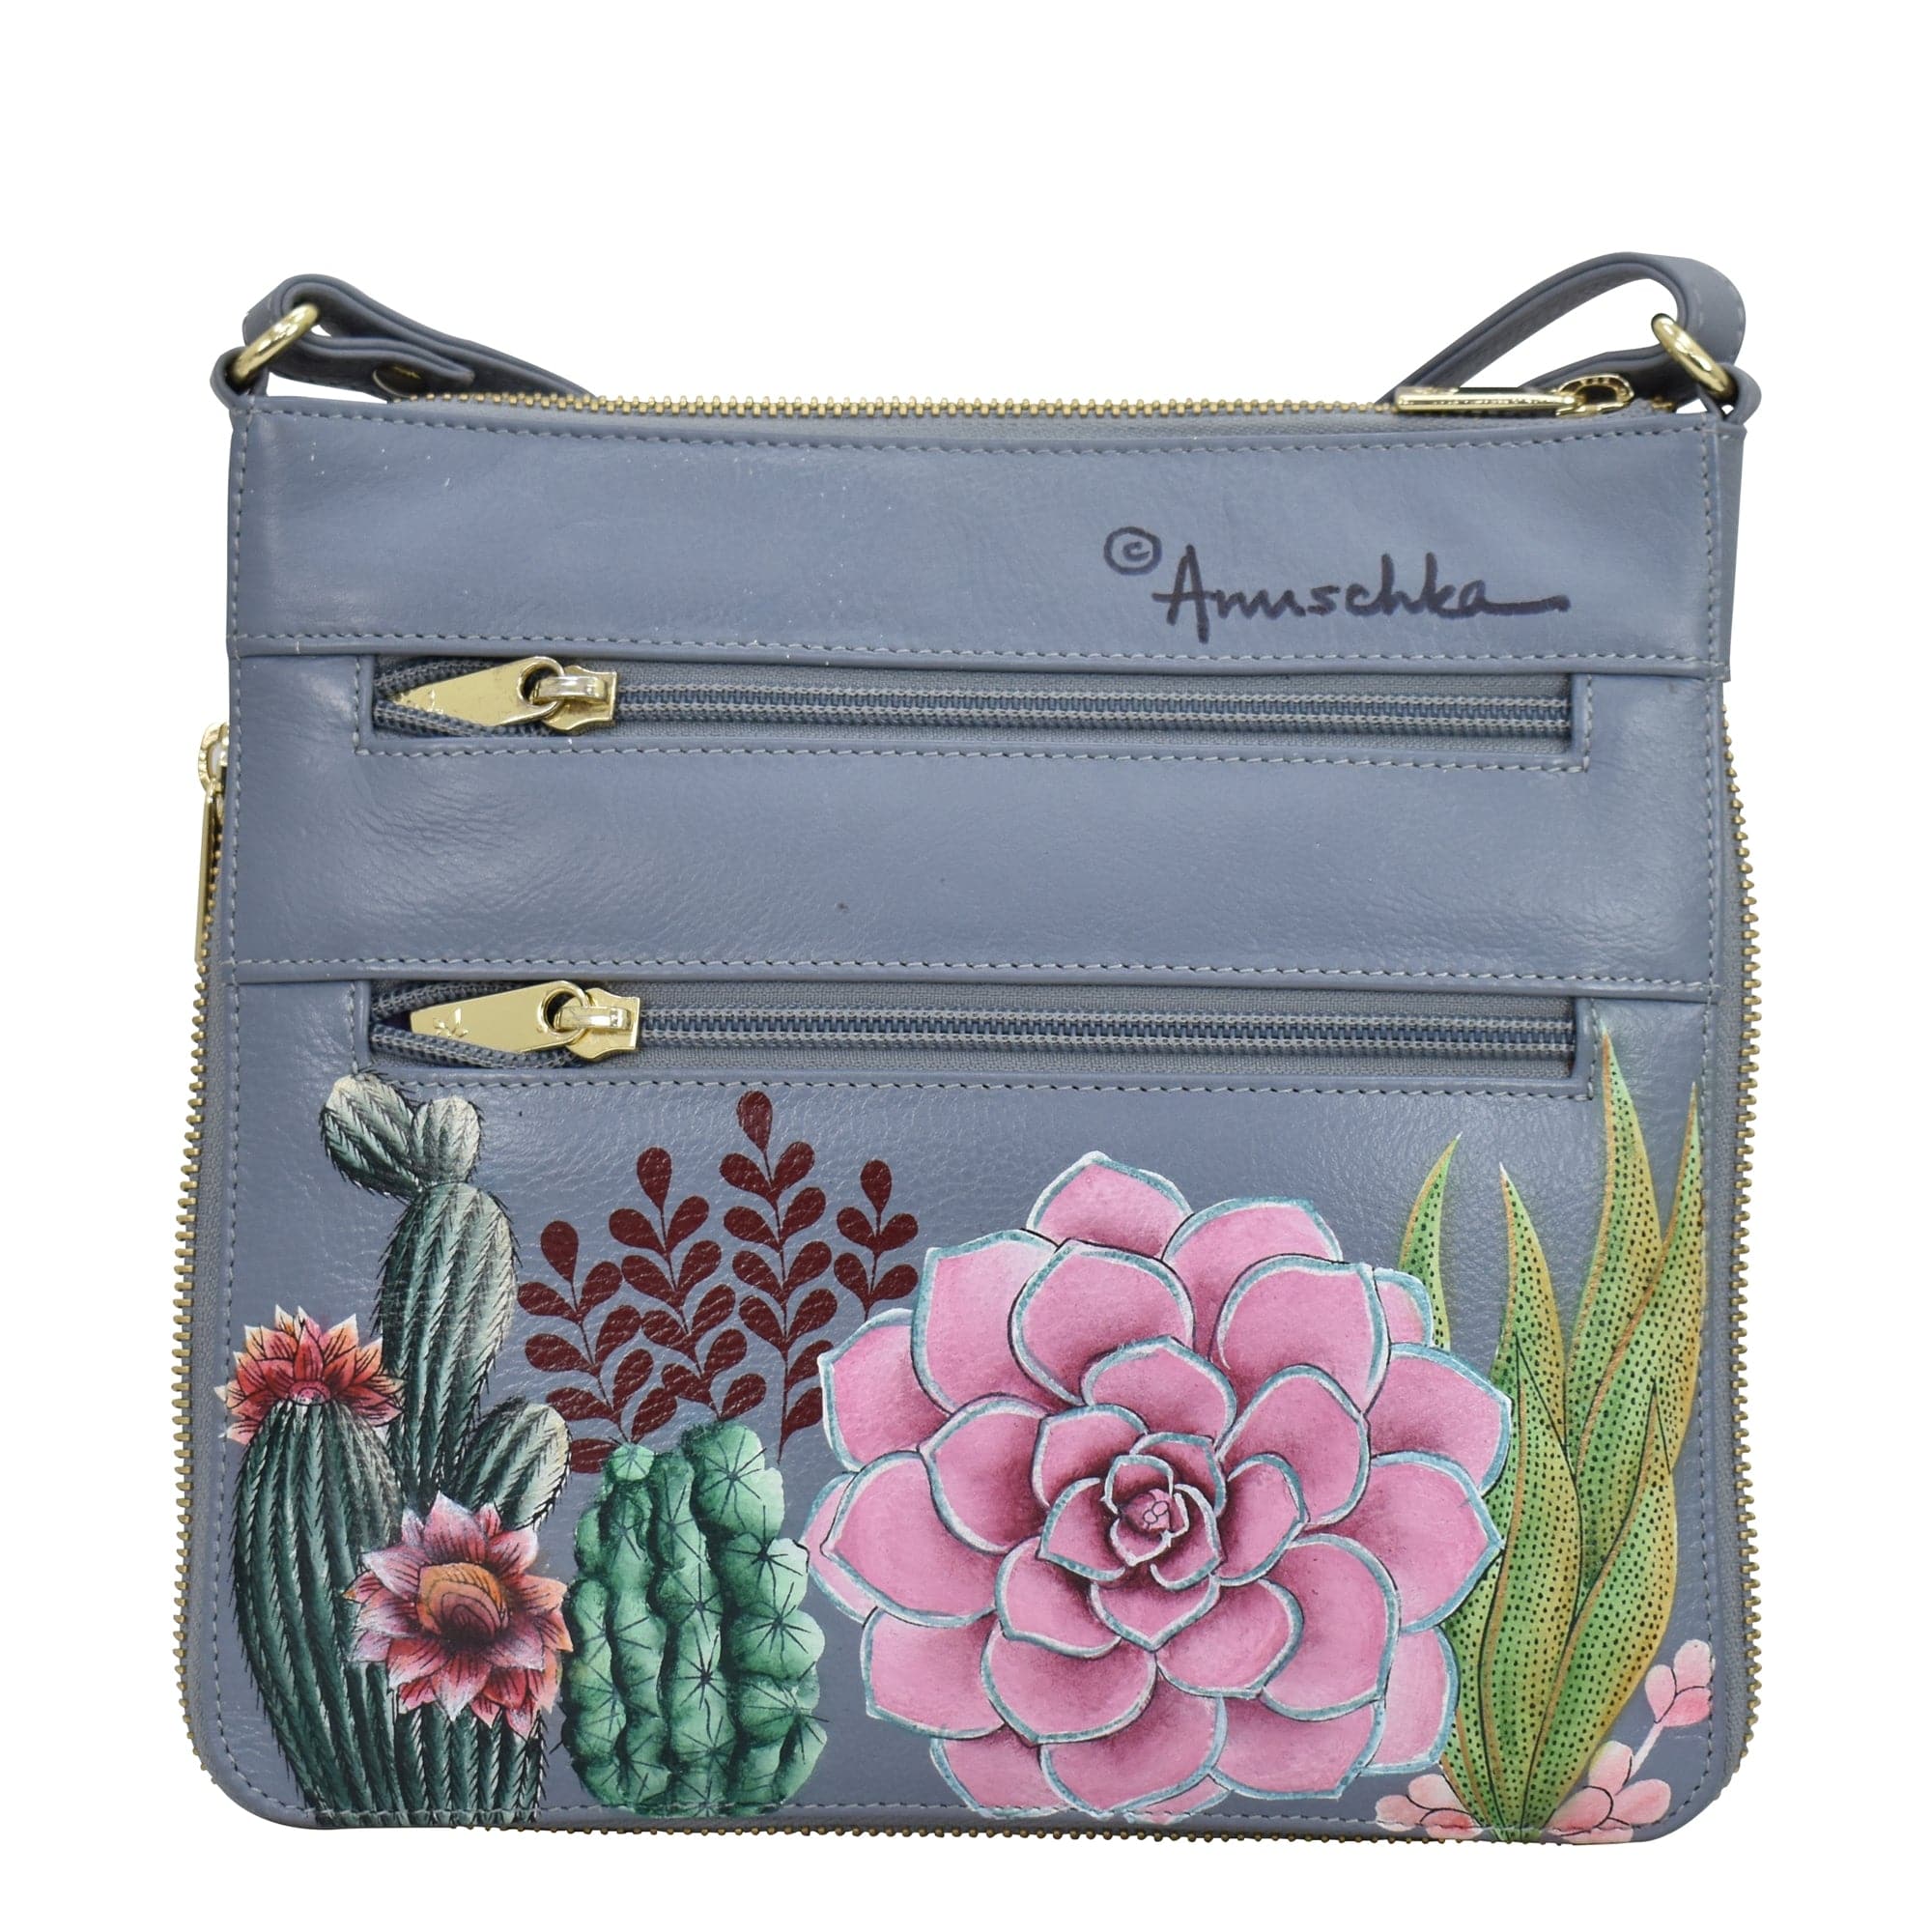 Anuschka Expandable Travel Crossbody Handbag 550 - Desert Garden